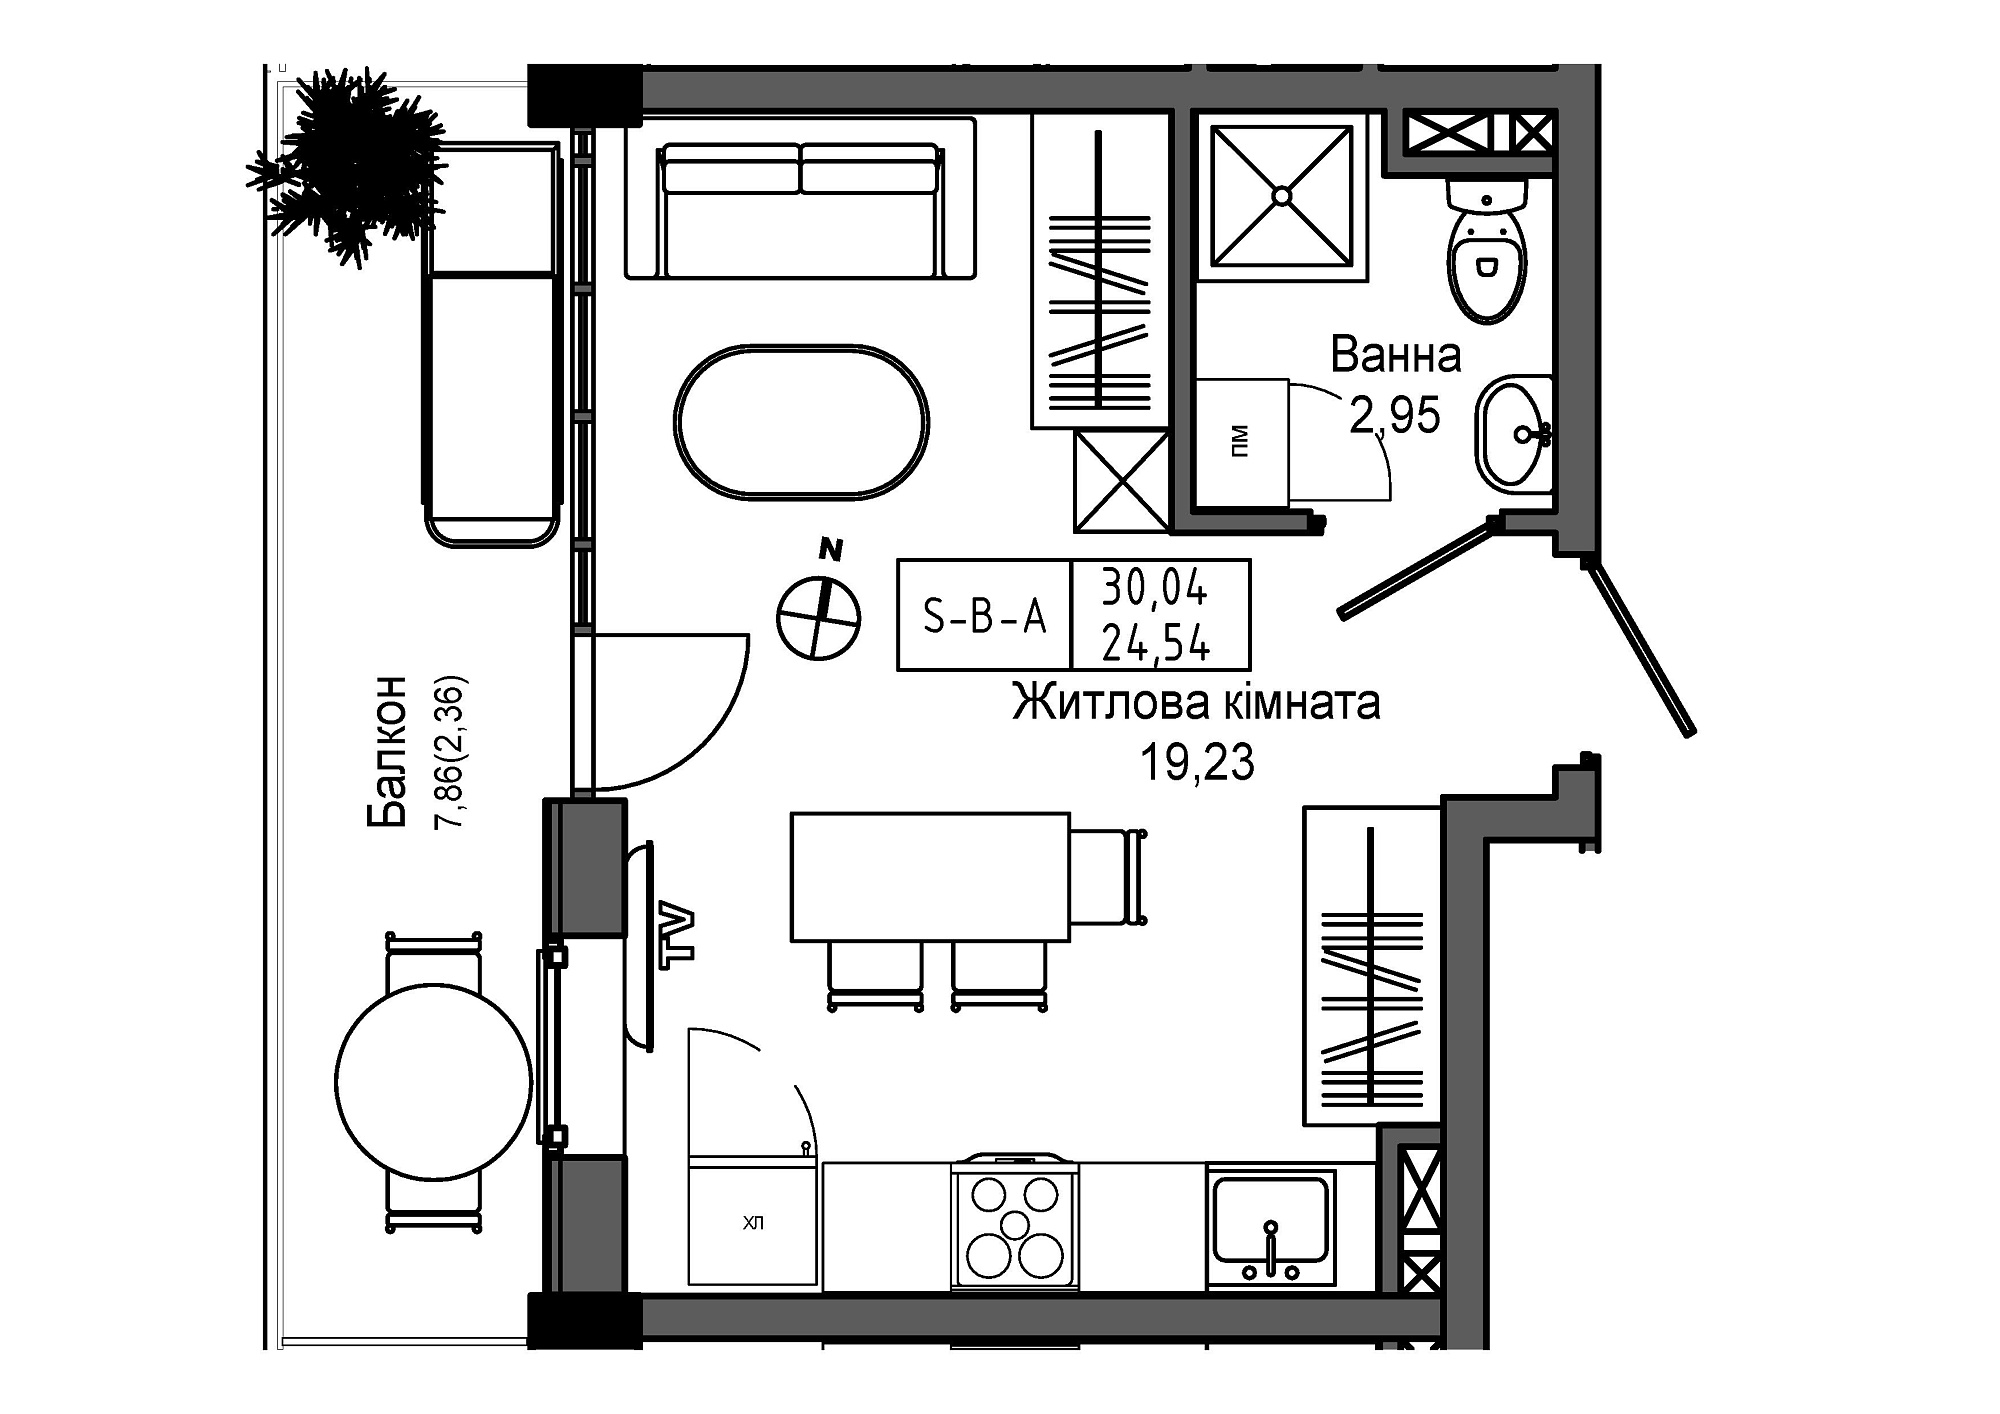 Планування Smart-квартира площею 24.54м2, UM-006-02/0009.